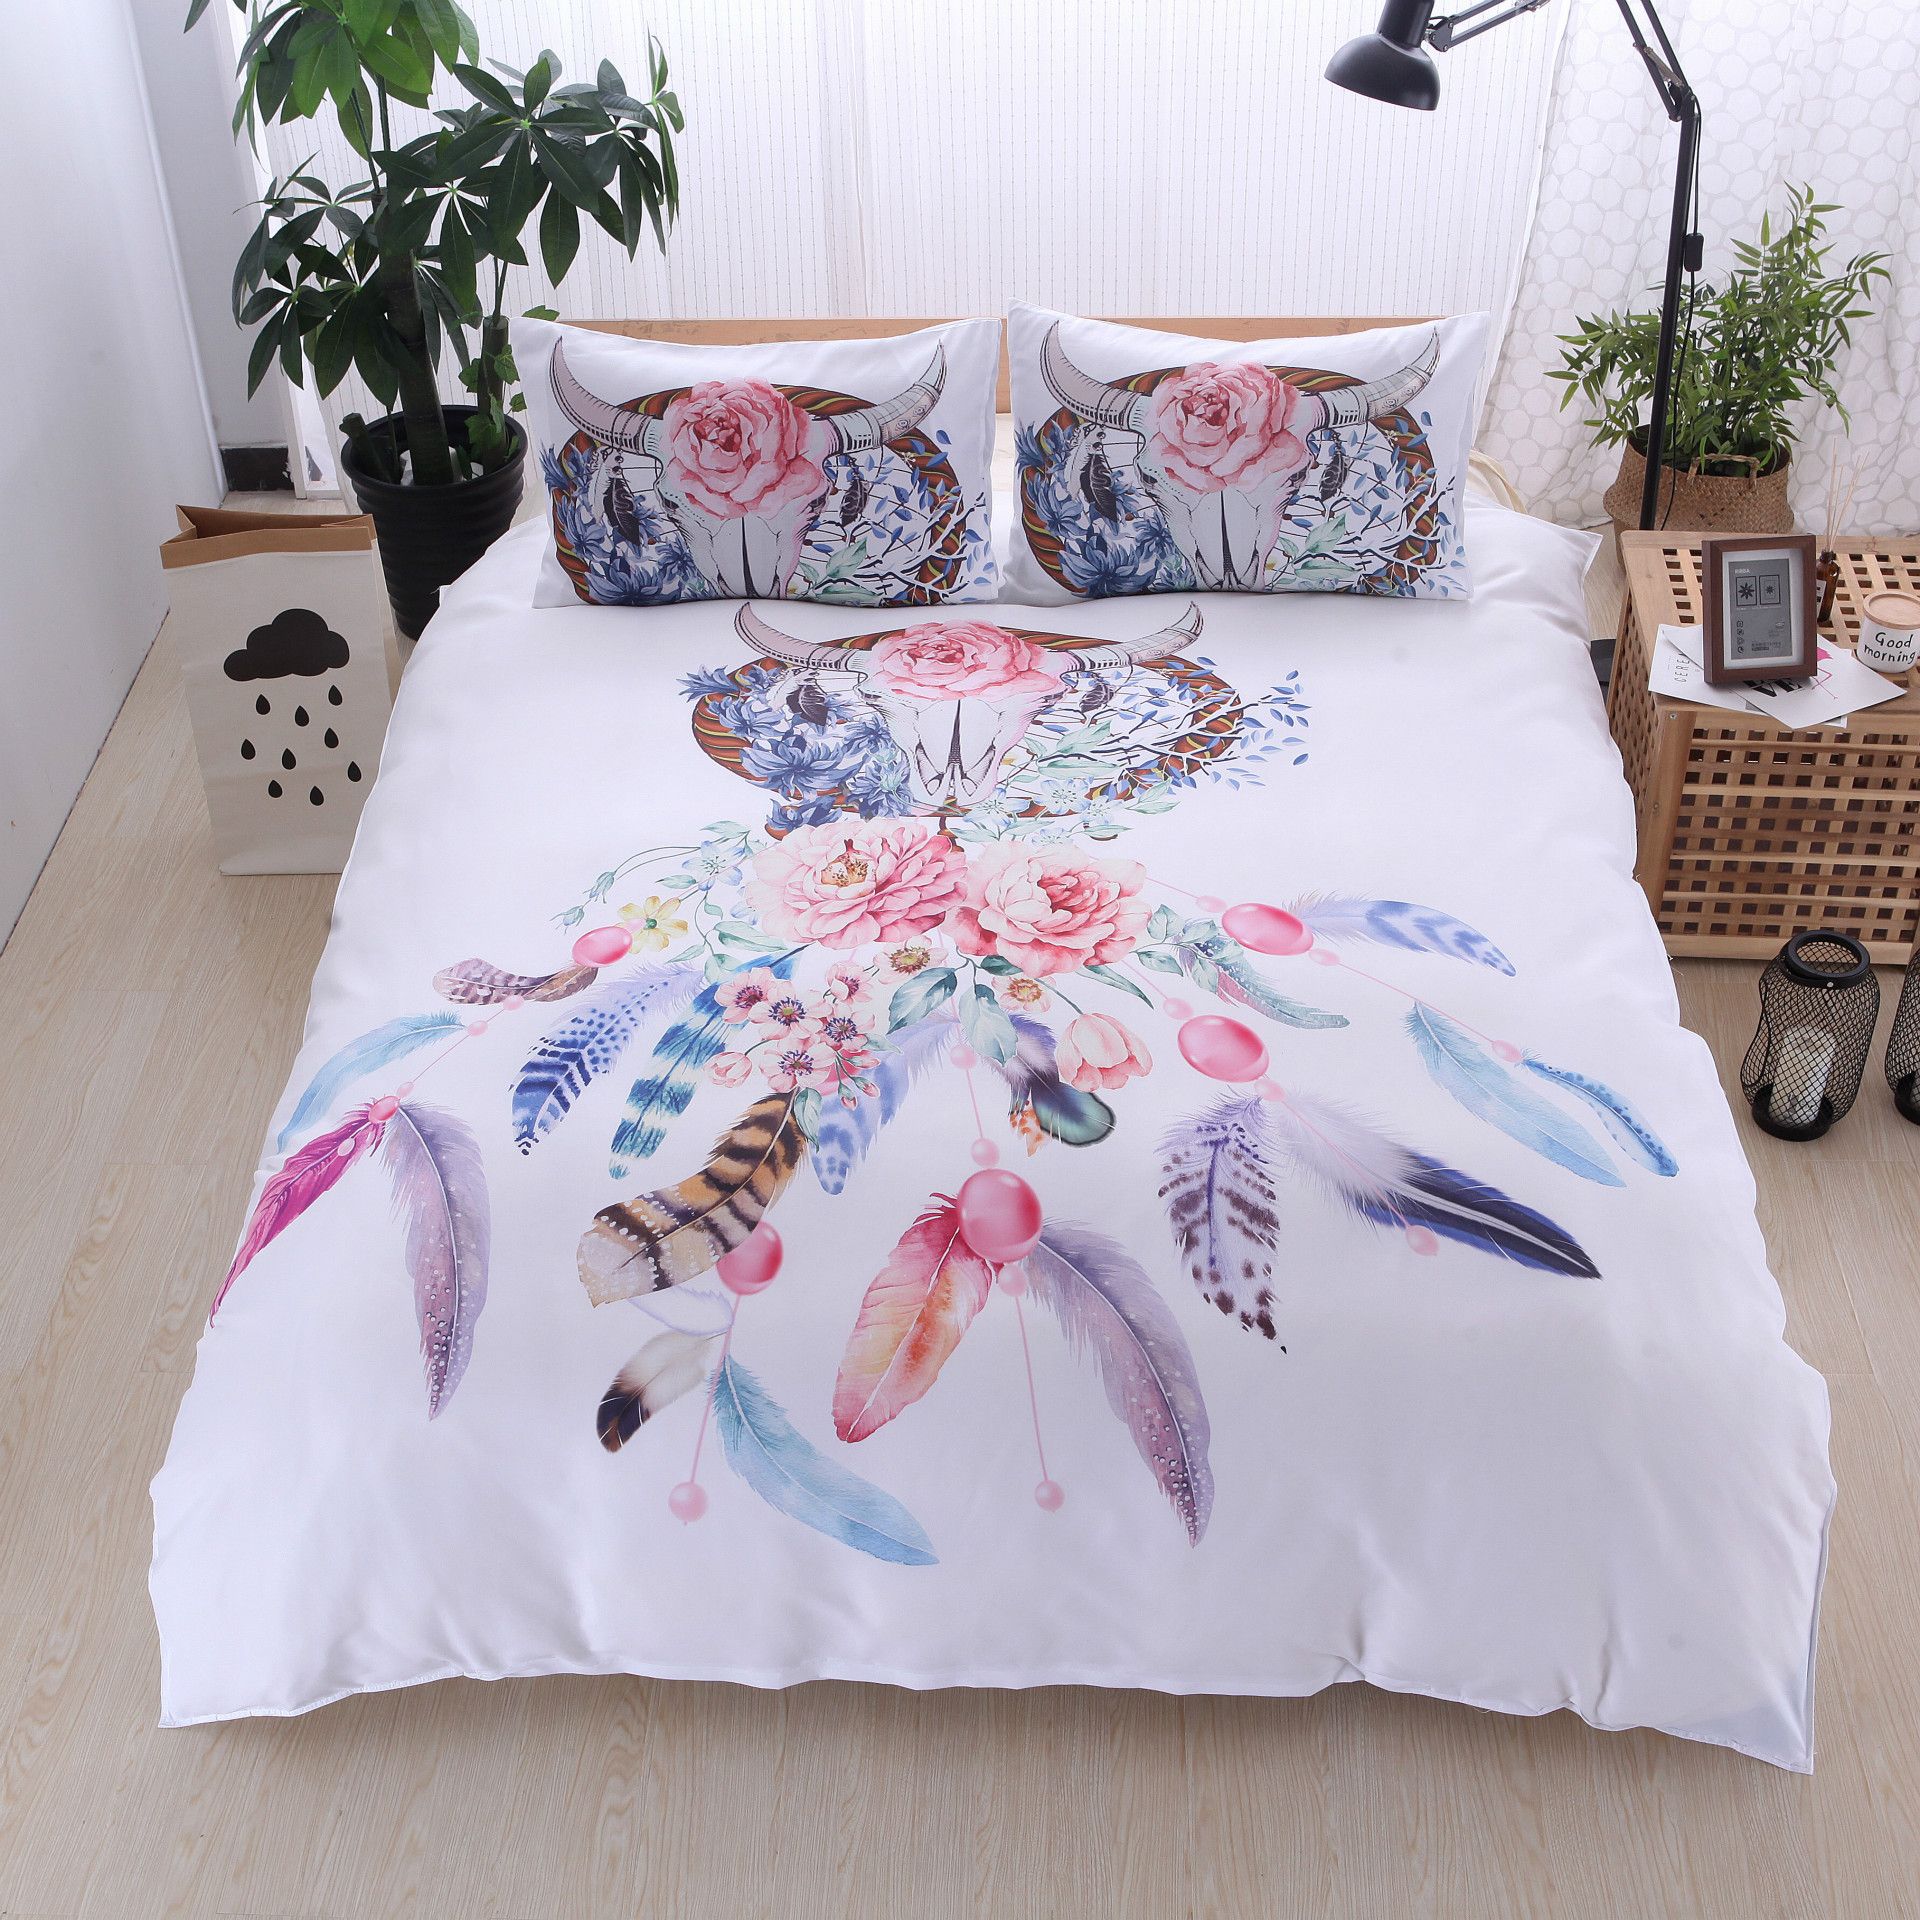 Dreamcatcher Feathers Luxury Watercolor Bedding Set Bohemian